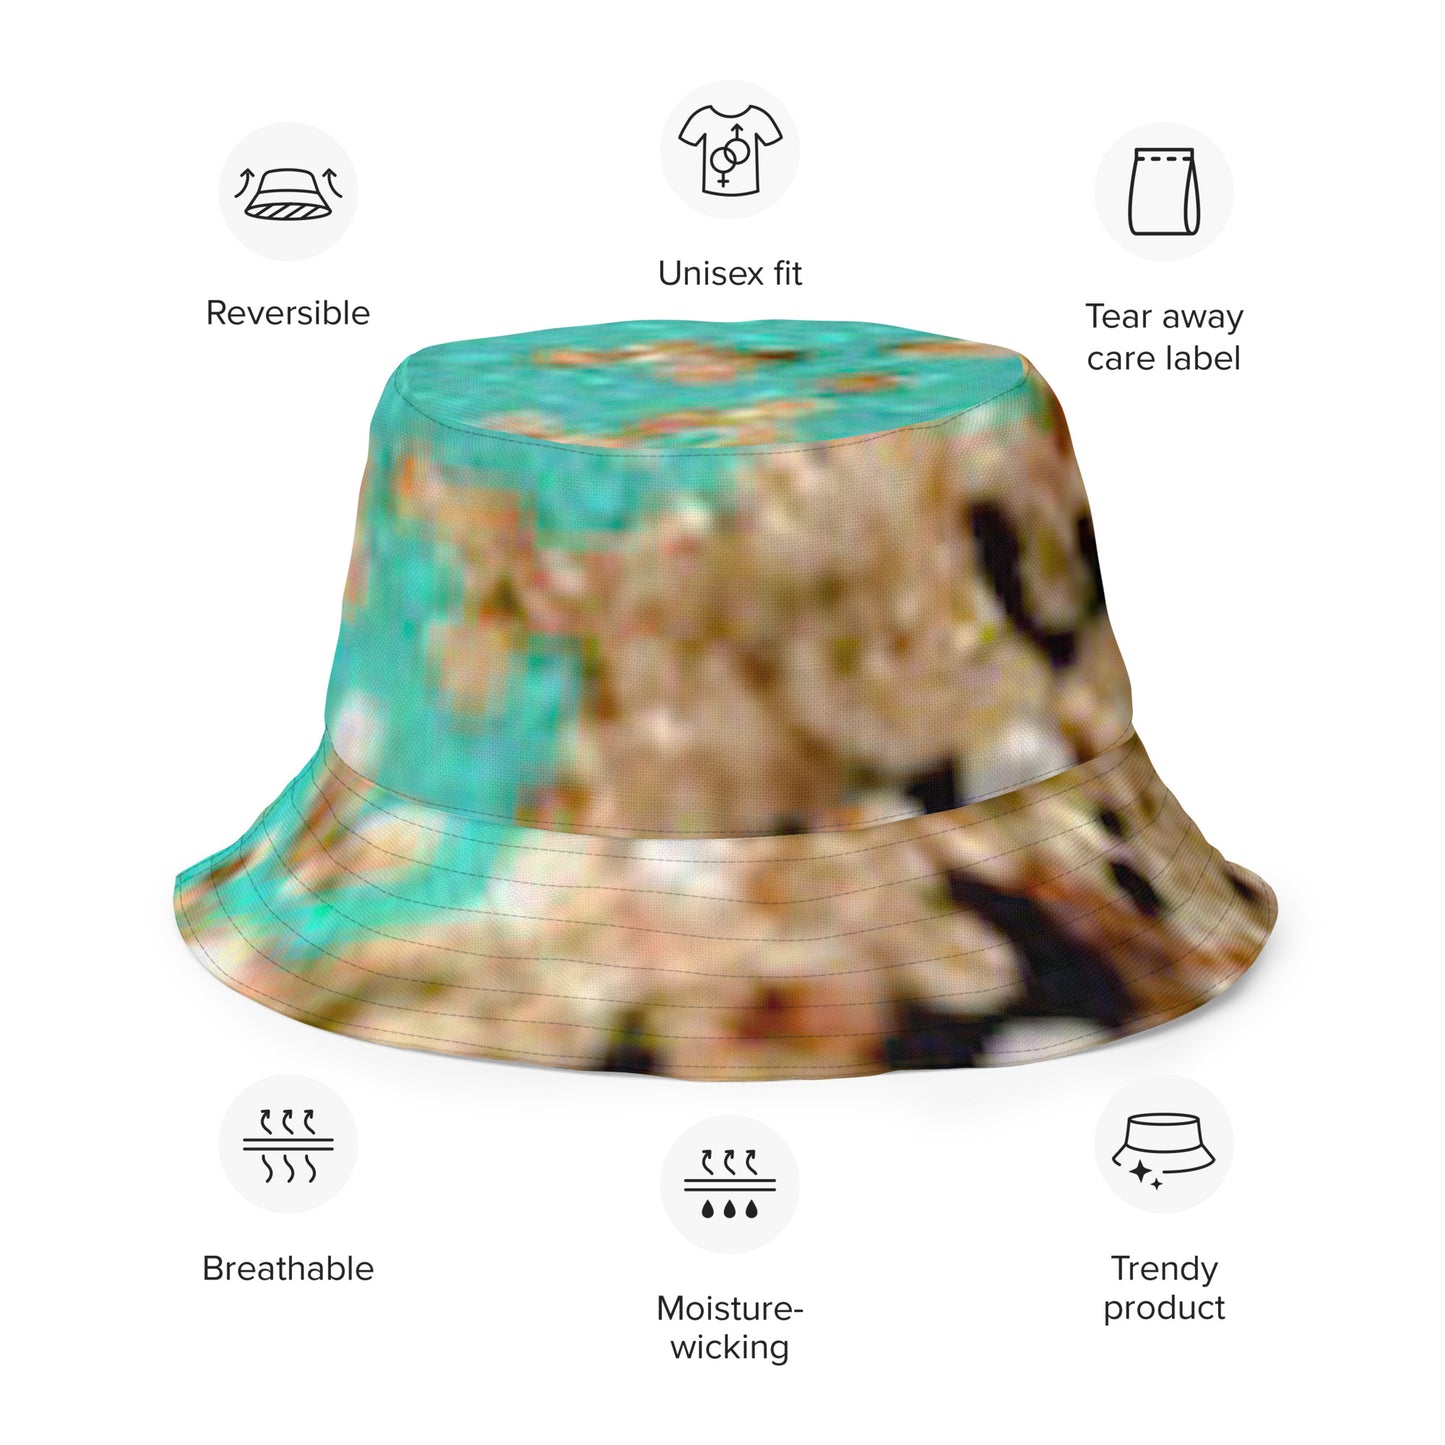 FZ Unisex Reversible bucket hat